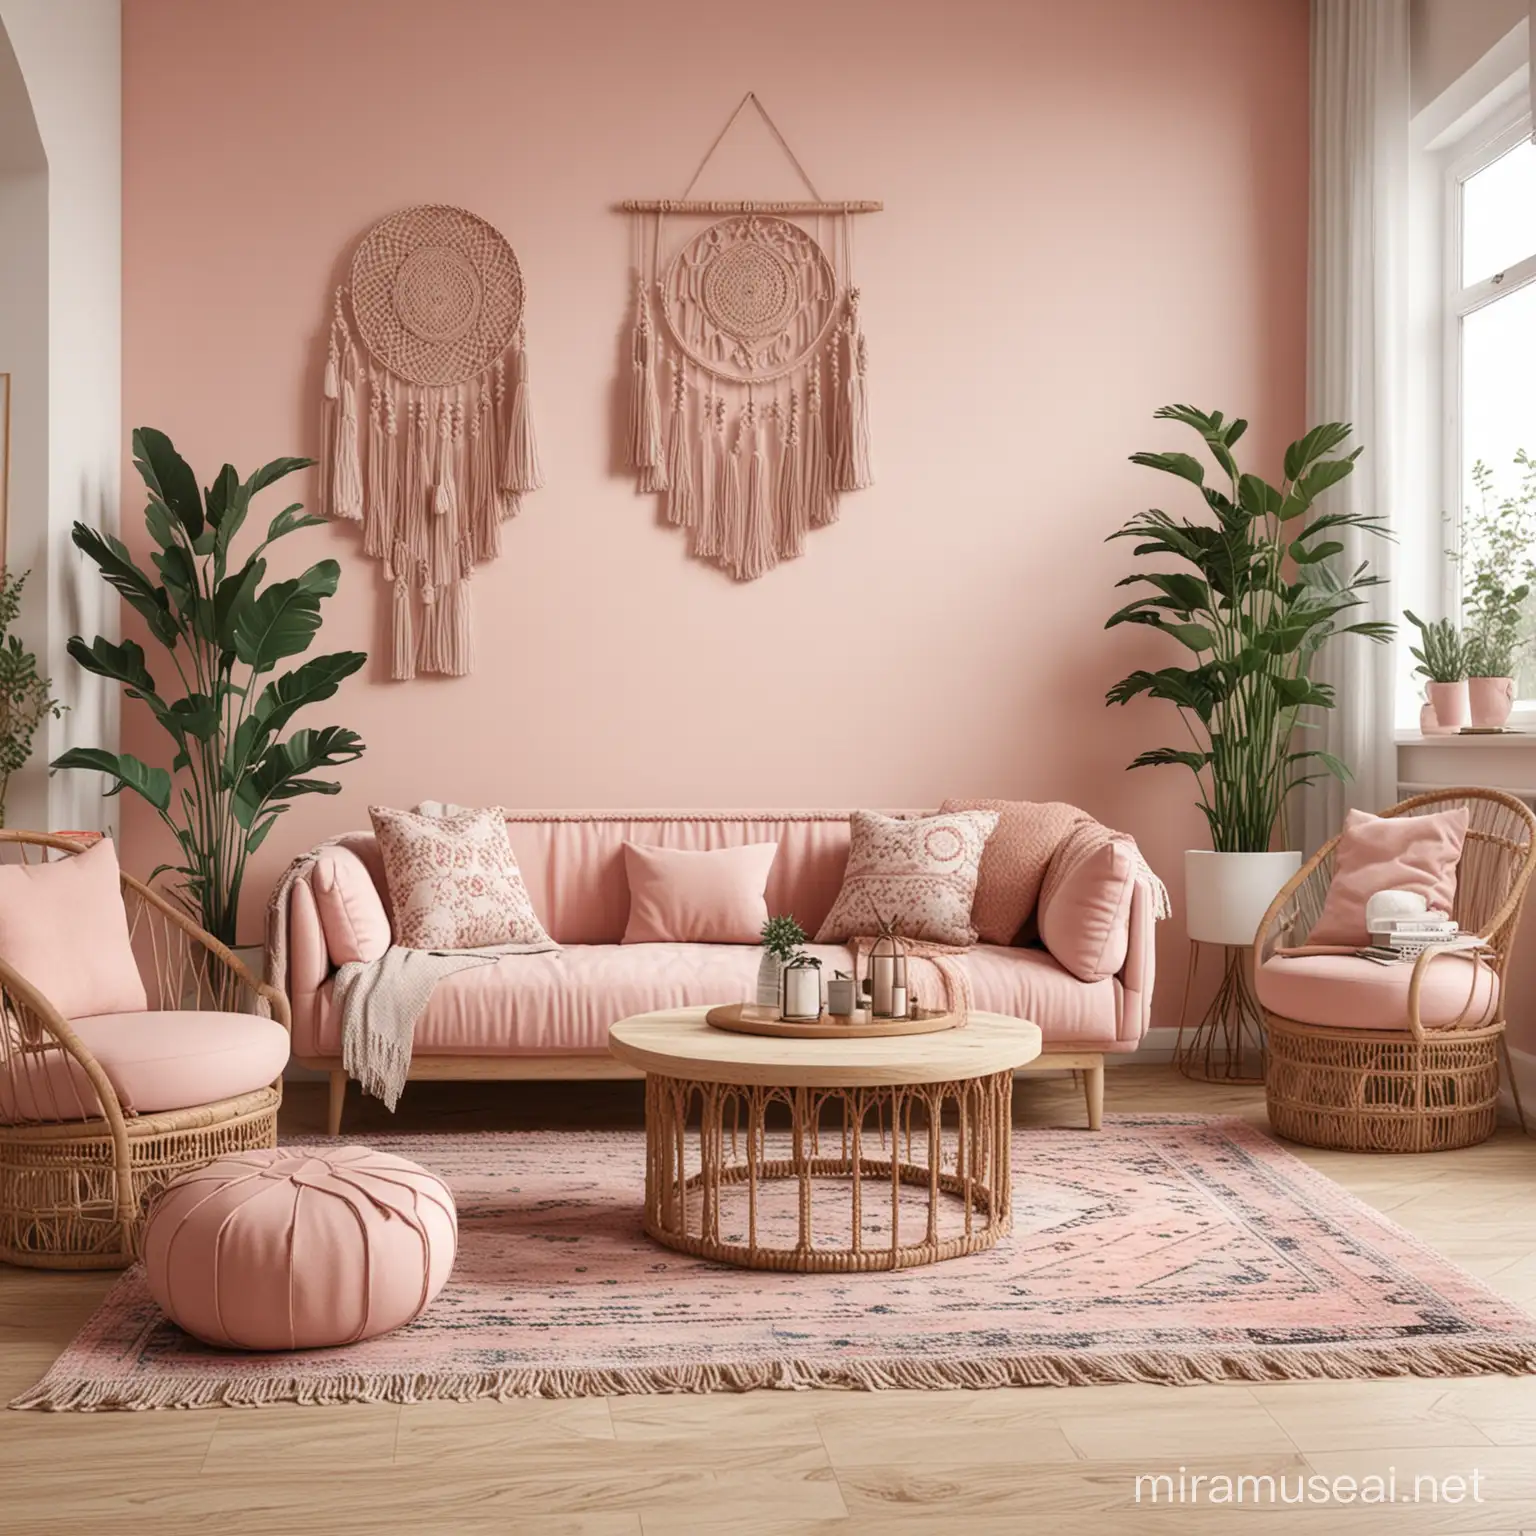 Boho Living Room Mockup with Pinkish Decor Accents